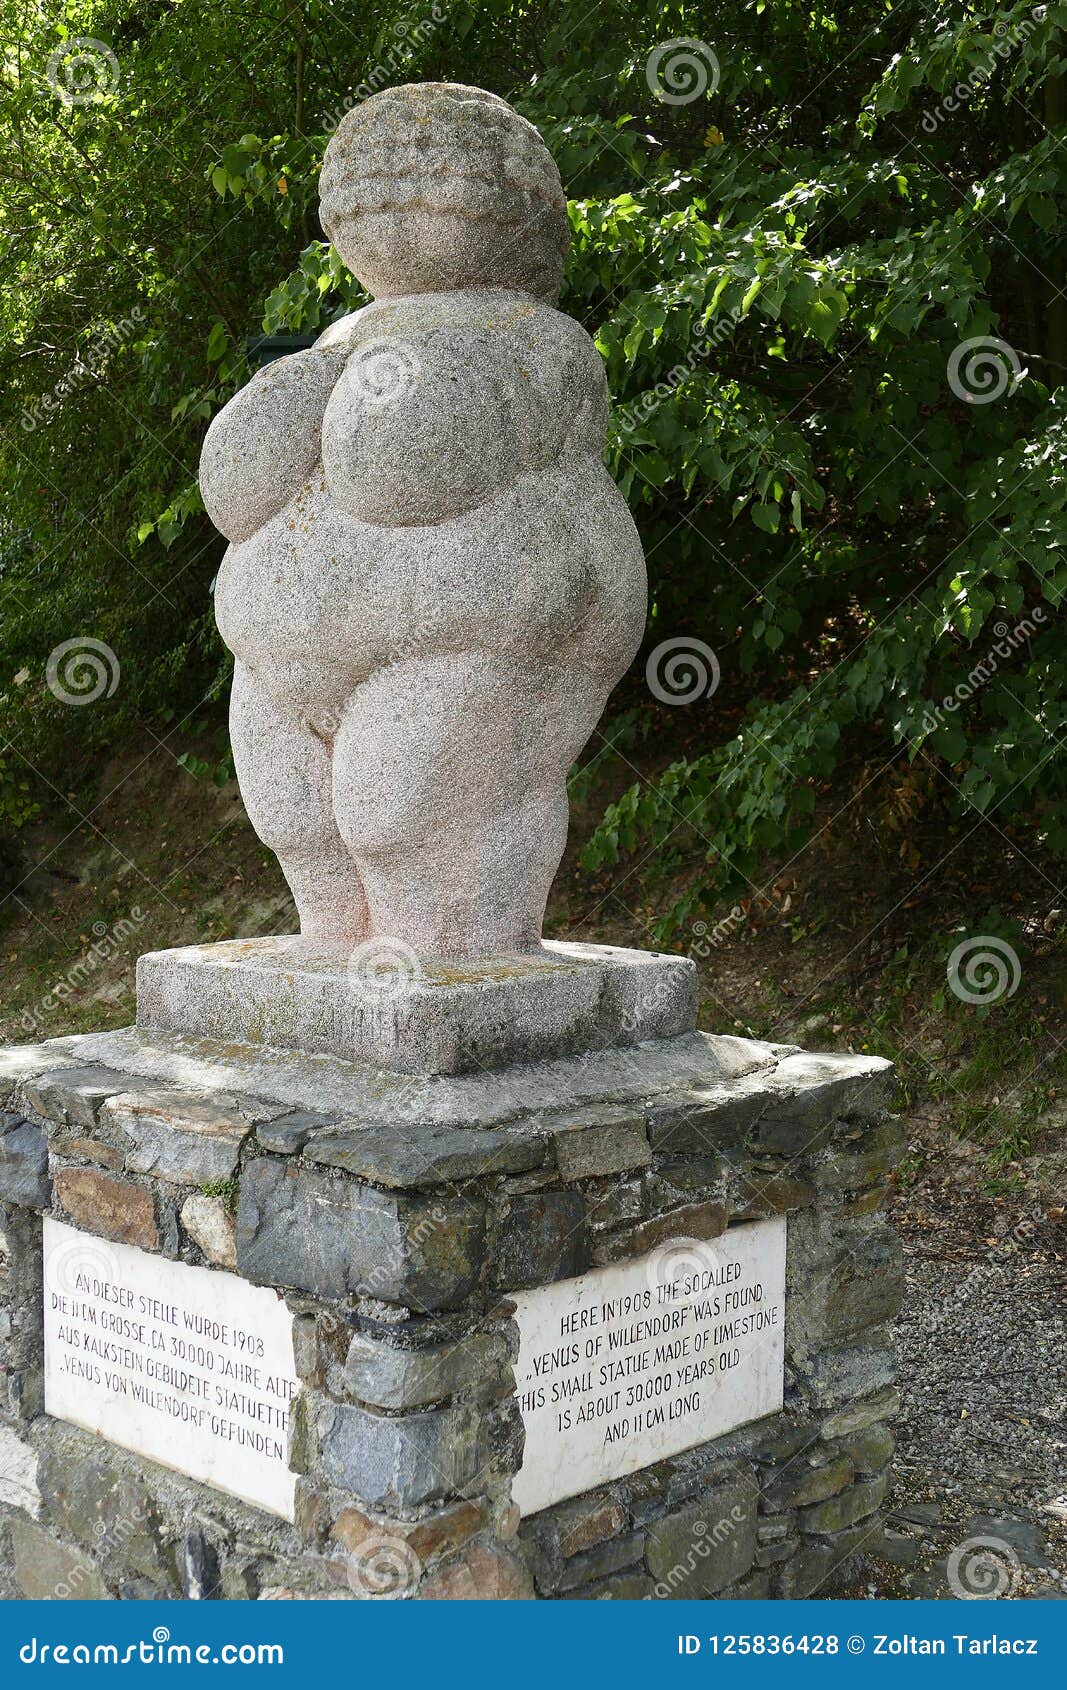 huge statue of venus of willendorf in austria.